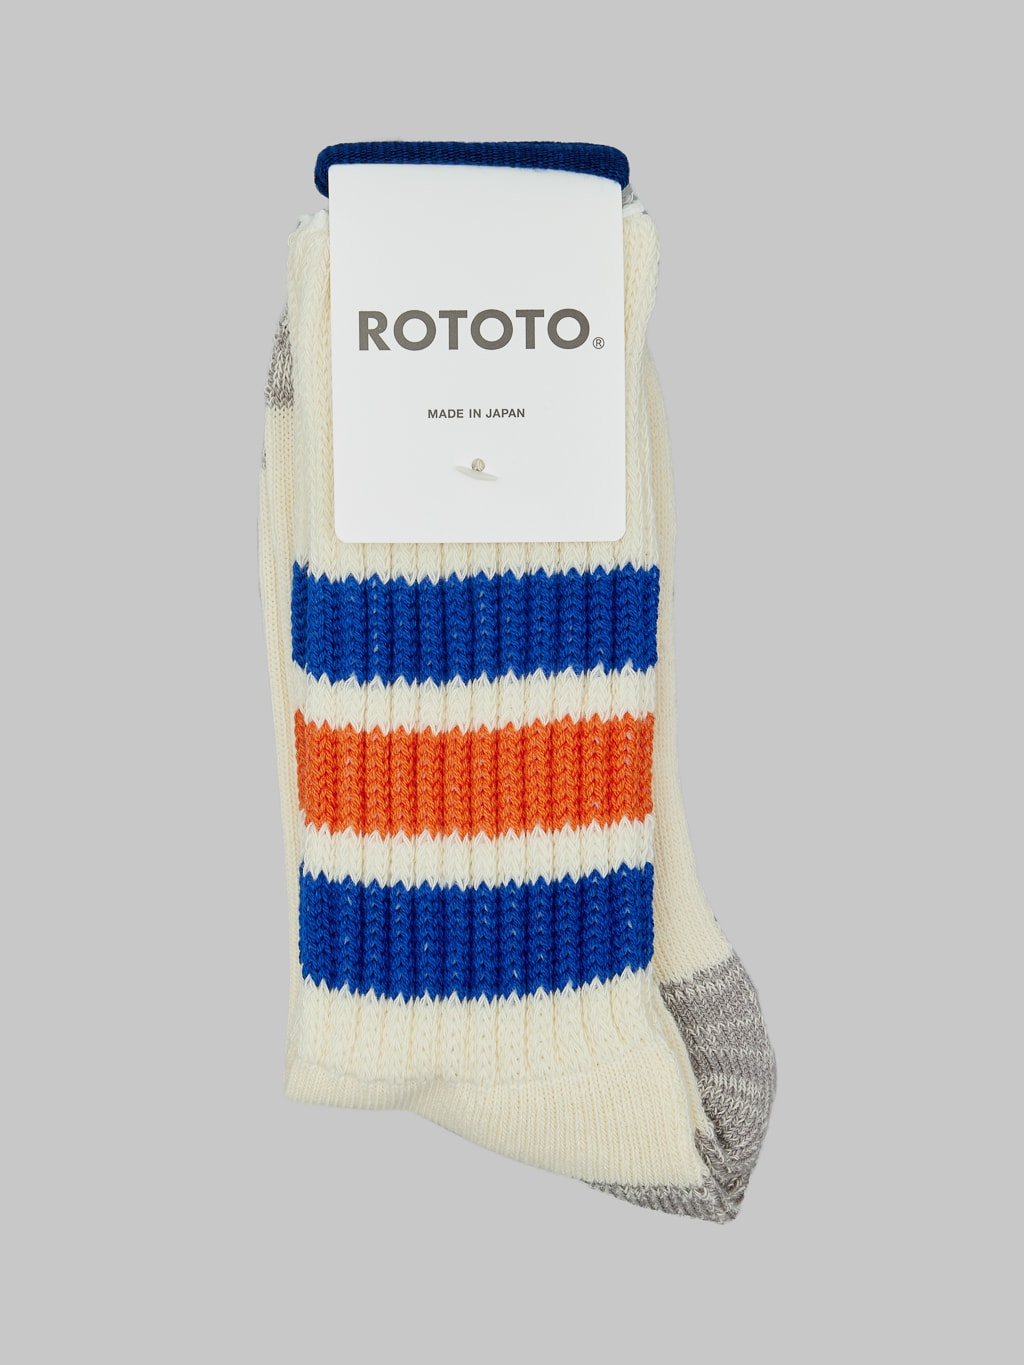 rototo oldschool crew socks blue orange japan made